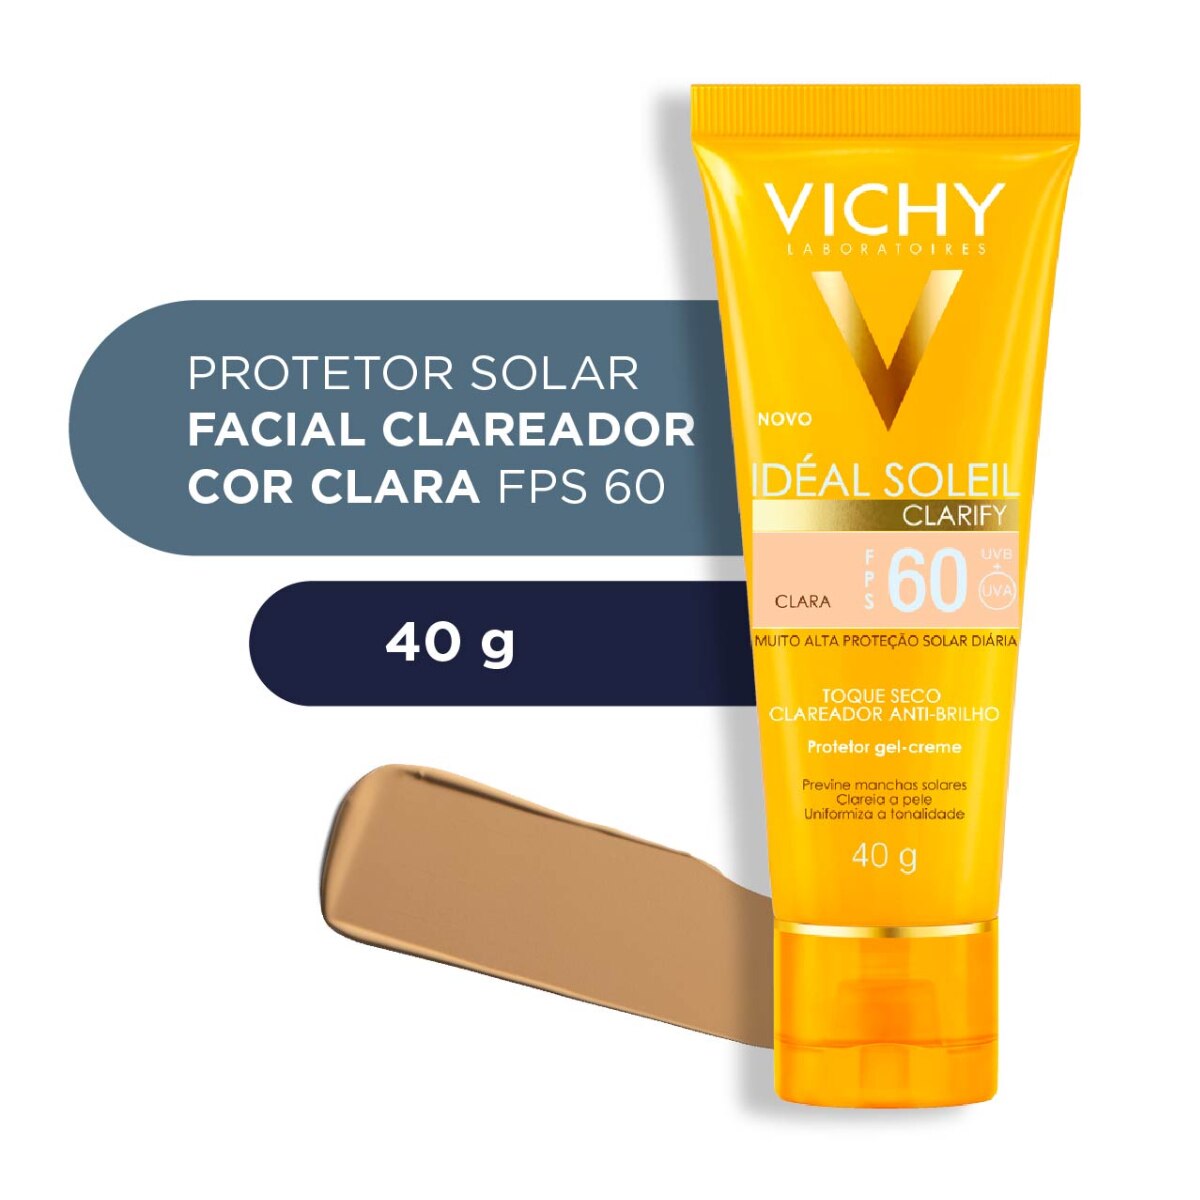 Protetor Solar Facial Vichy Ideal Soleil Clarify FPS60 Clara 40g